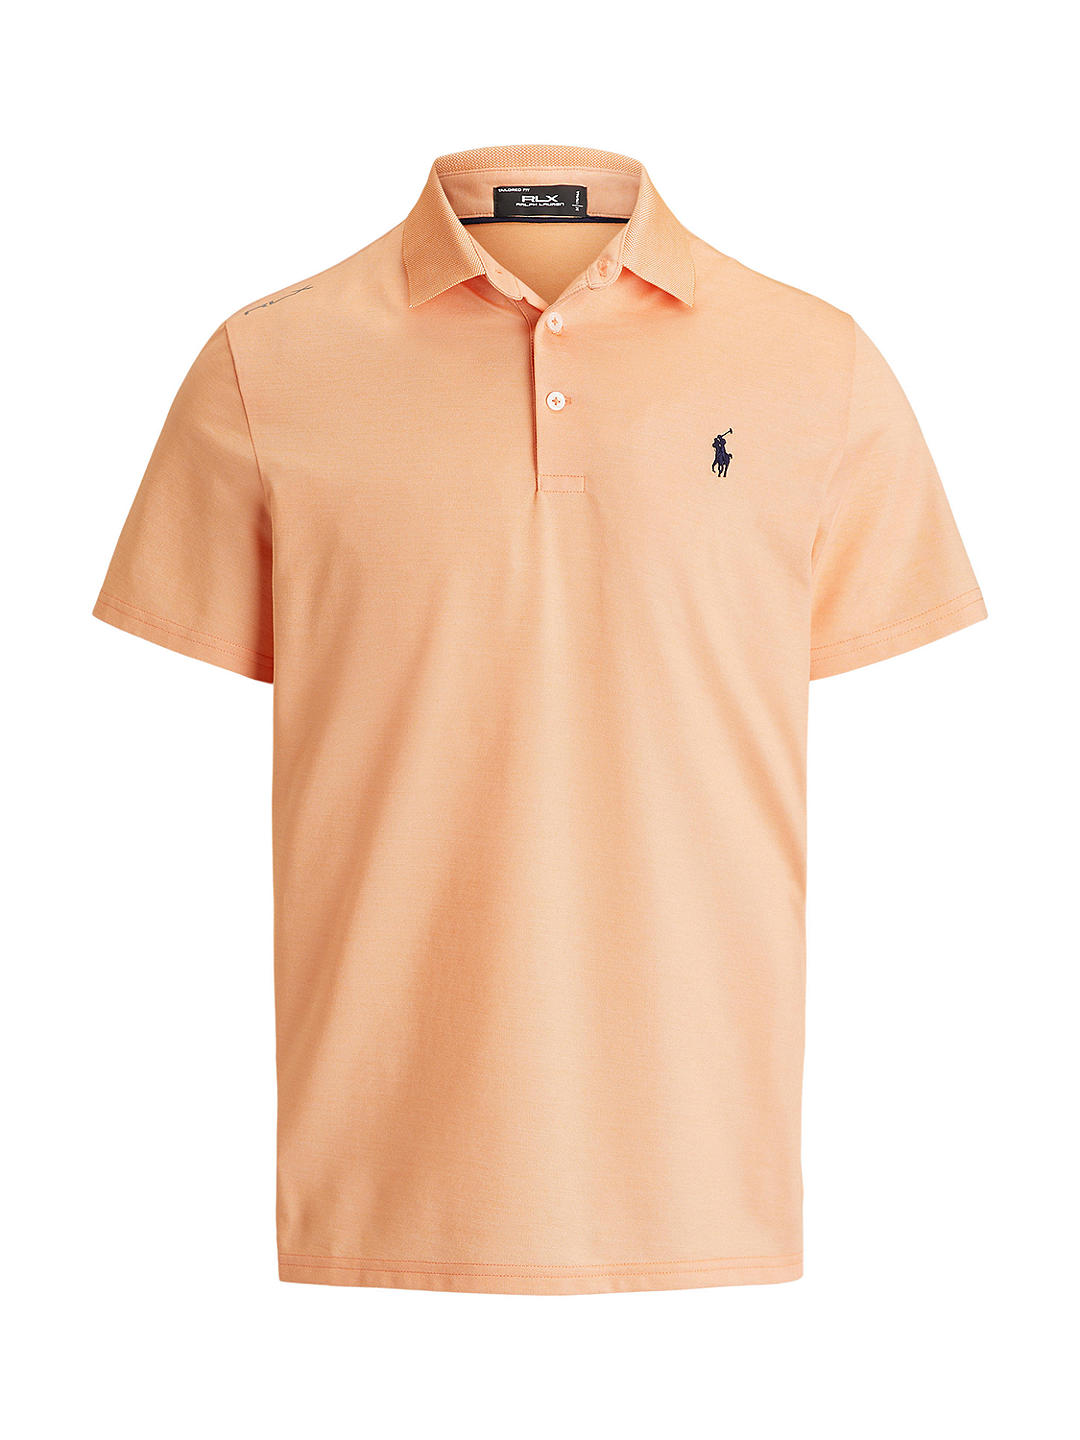 Ralph Lauren Tailored Fit Performance Mesh Polo Shirt, Orange